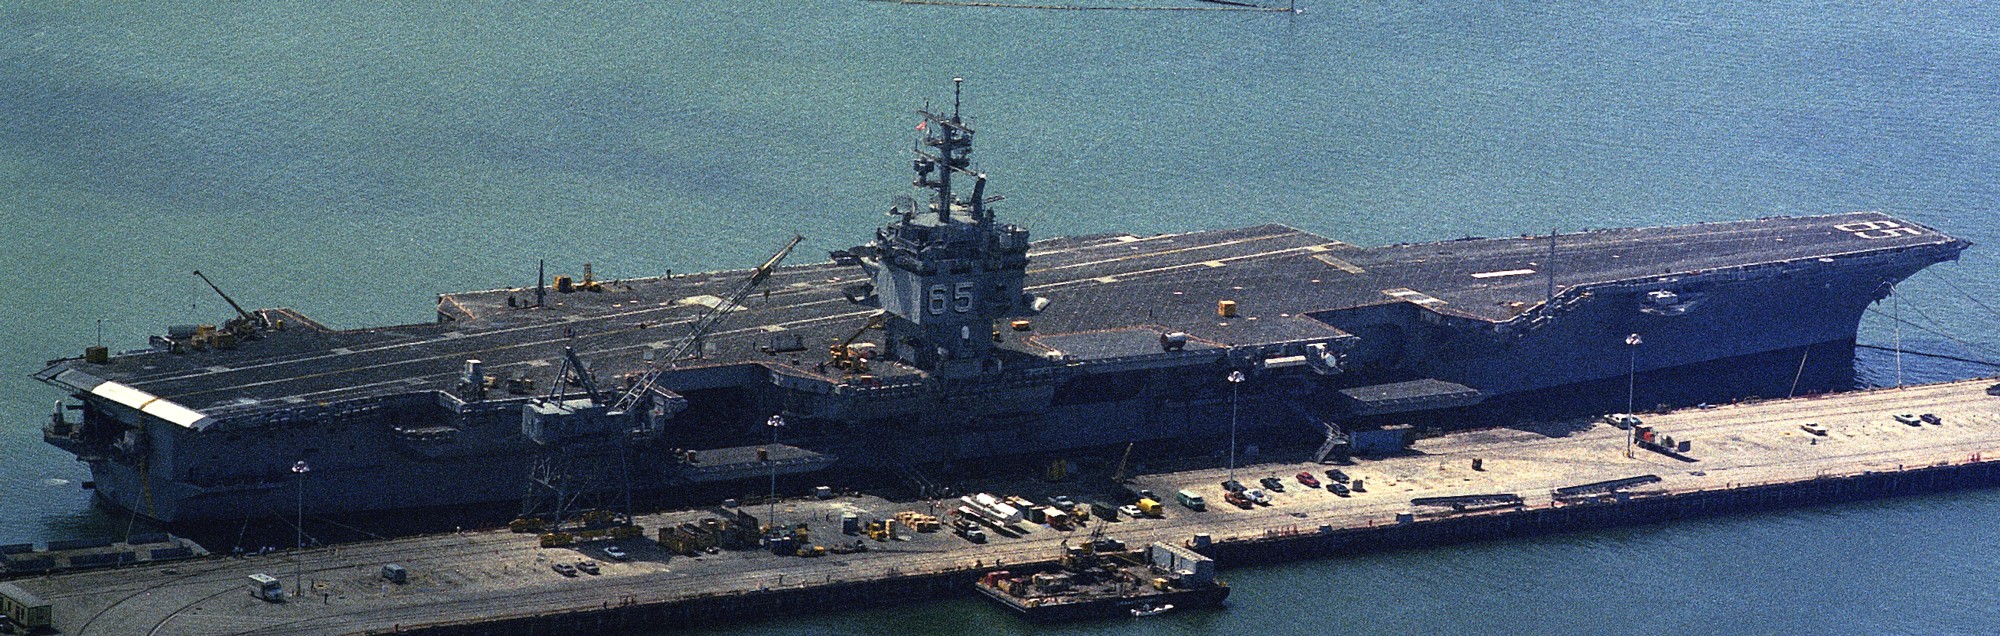 cvn-65 uss enterprise aircraft carrier us navy nas alameda california 167